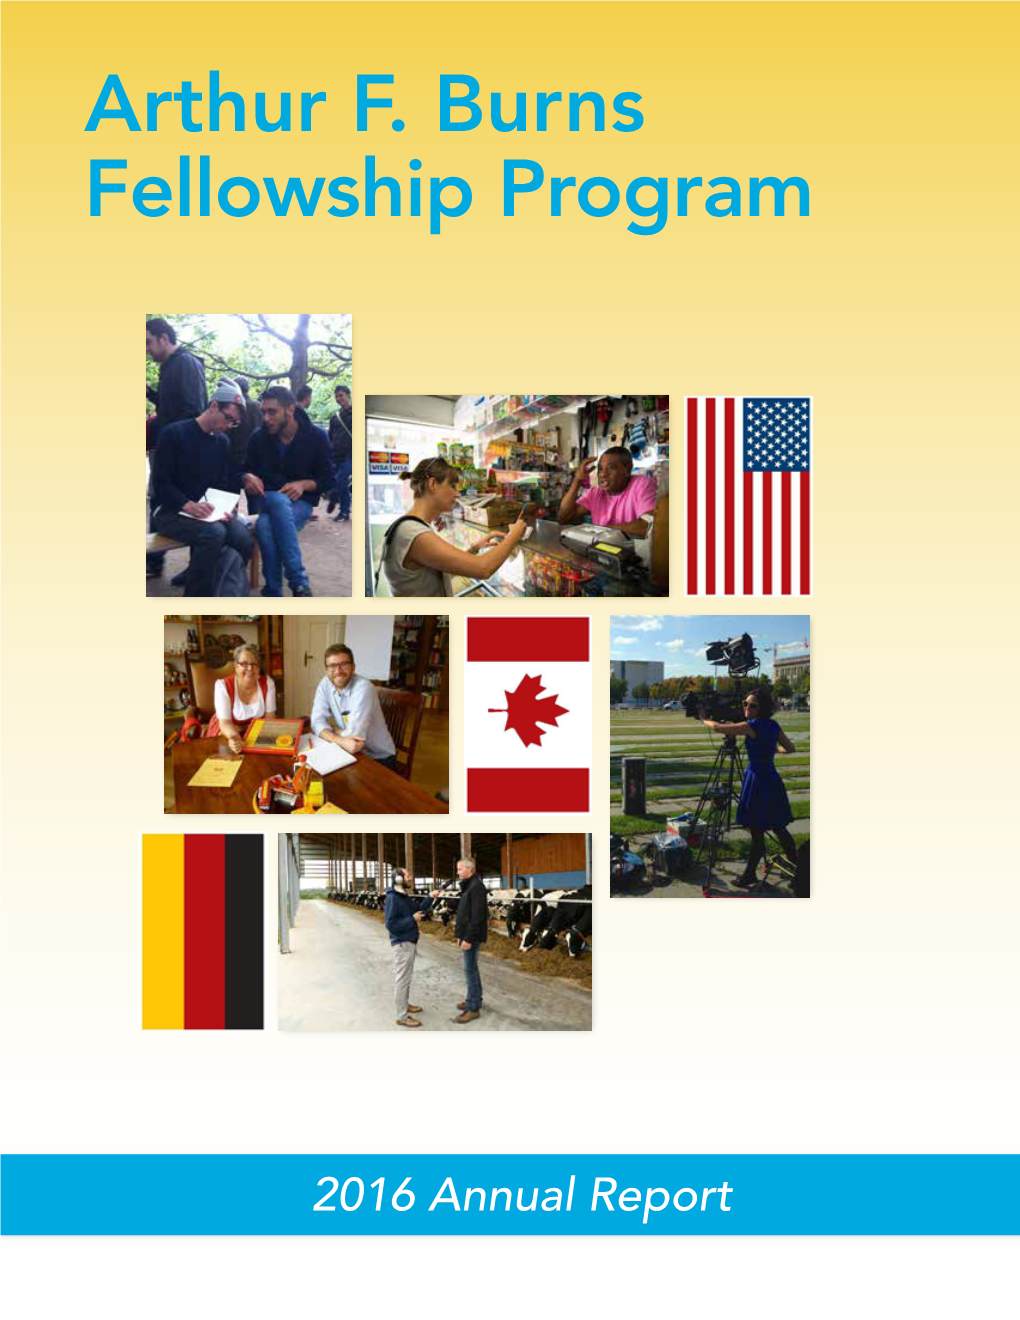 Arthur F. Burns Fellowship Program